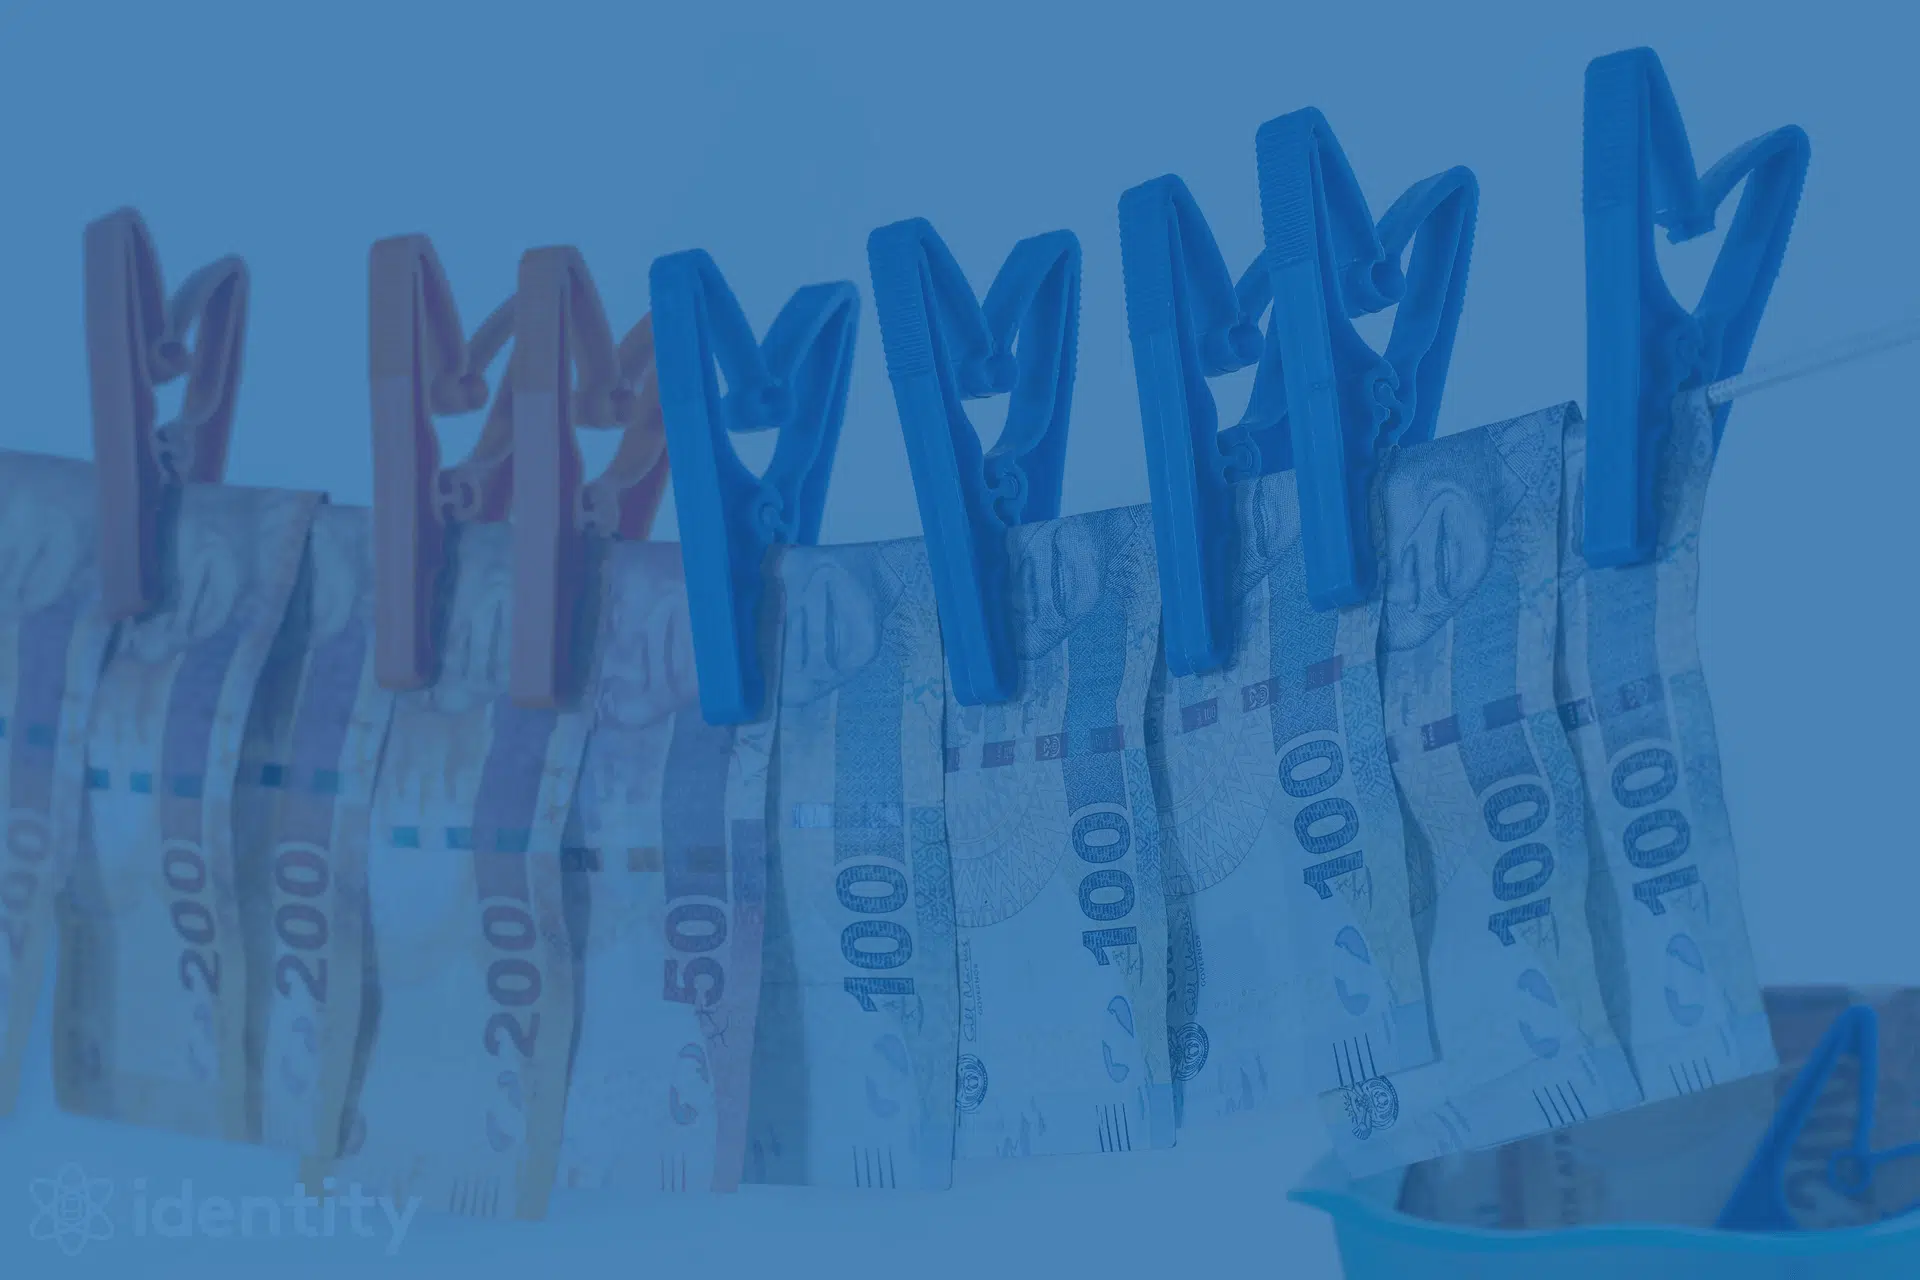 Smurfing in Money Laundering Explained - iDenfy